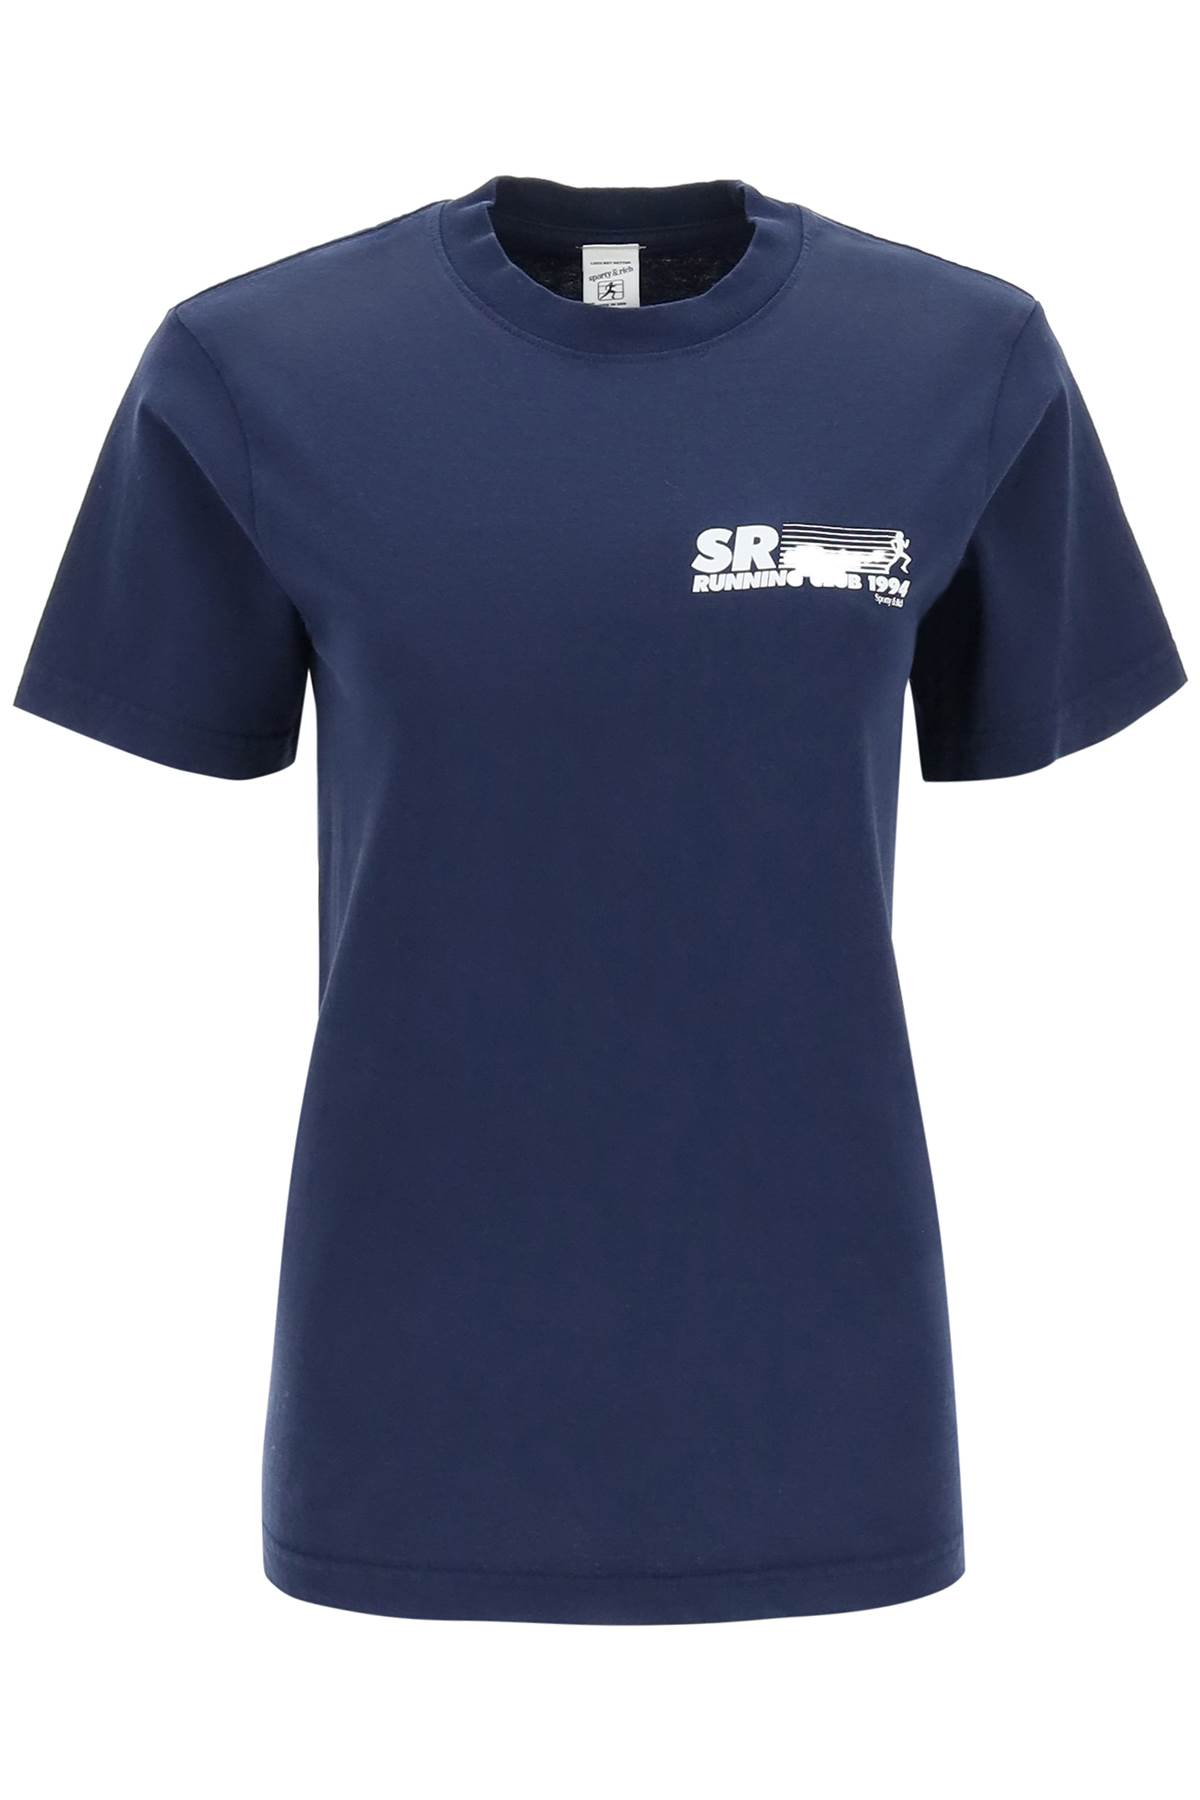 Sporty & Rich Sr Running Club T-shirt